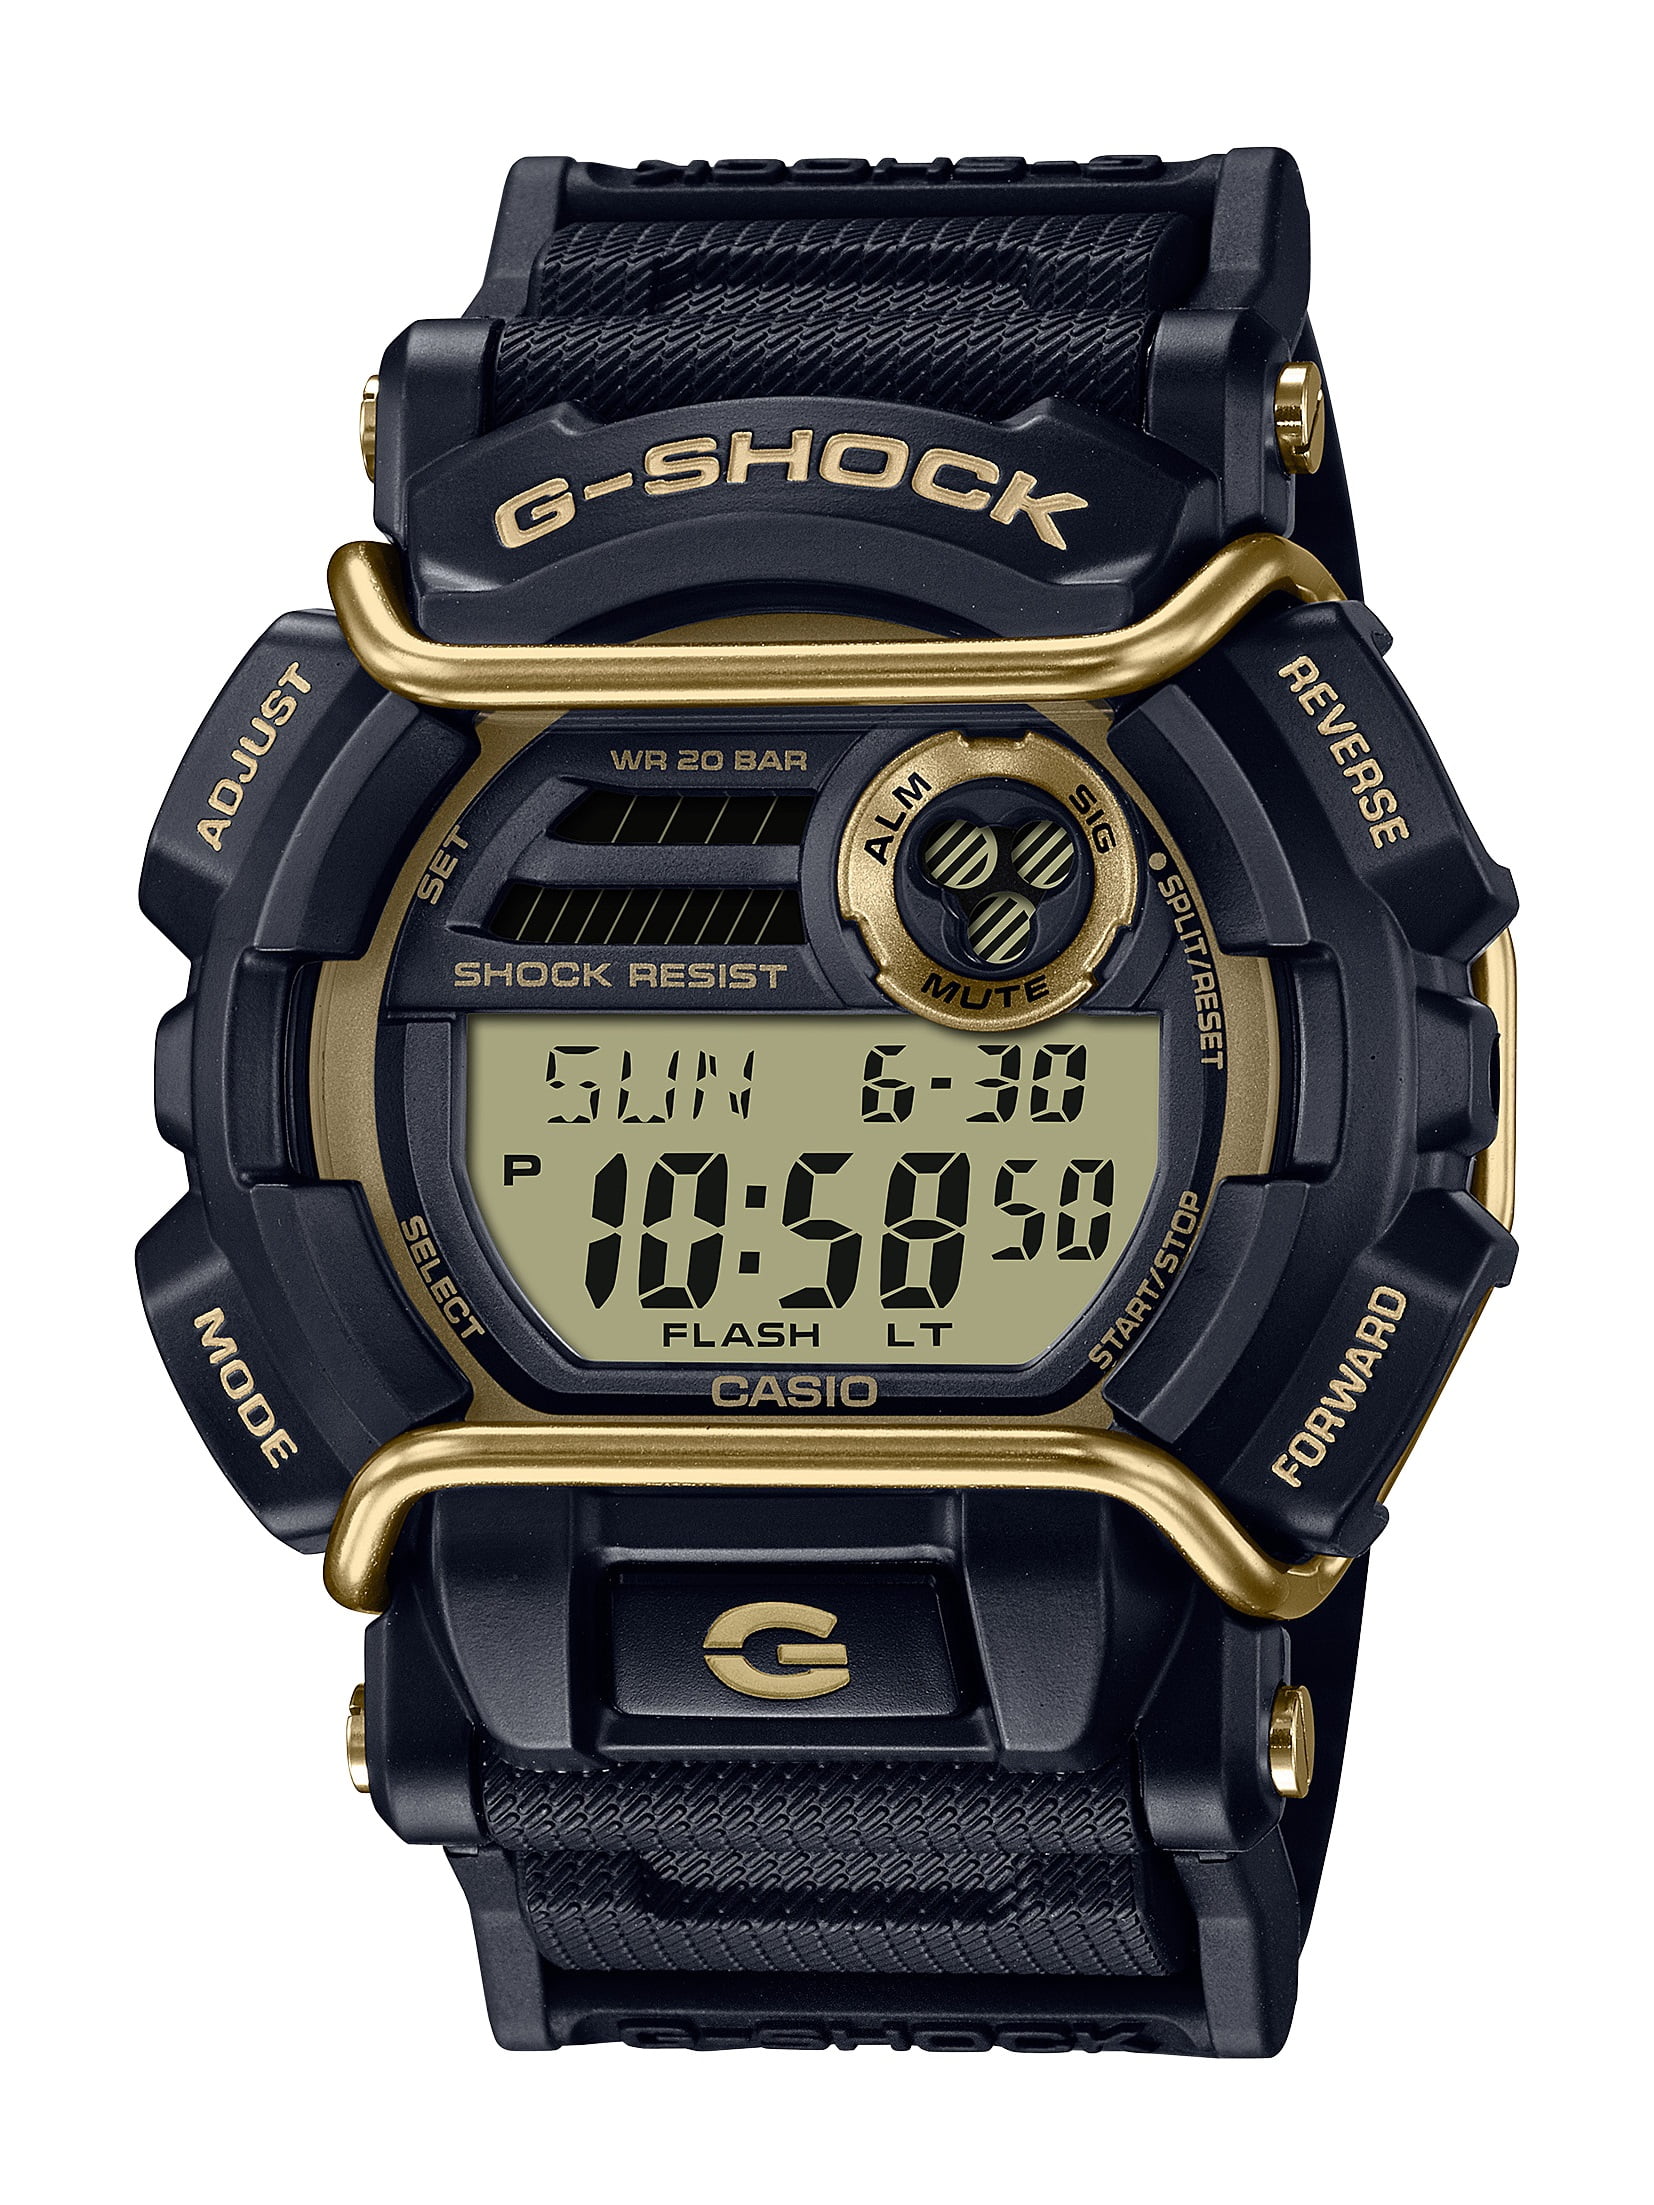 Casio Black and Gold Sport Watch - GD-400GB-1B2CR - Walmart.com